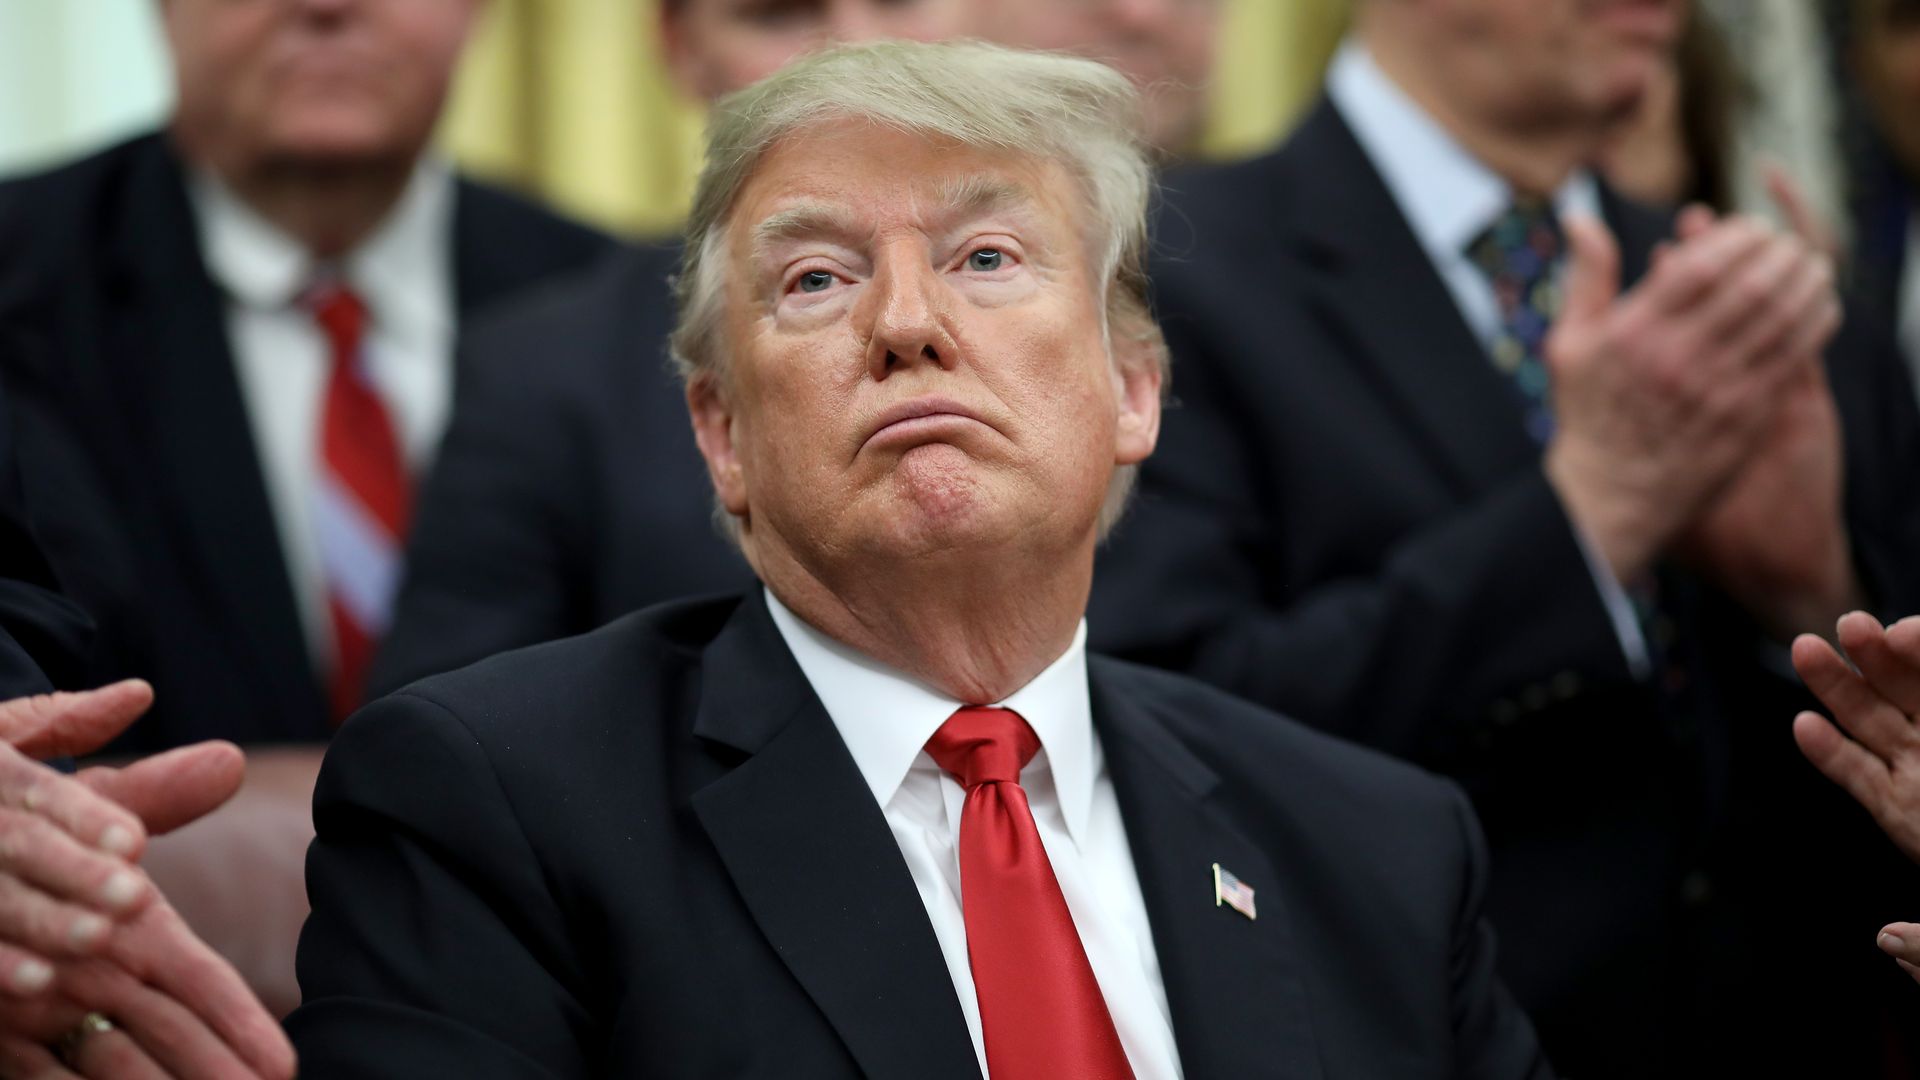 Donald Trump looks mad.